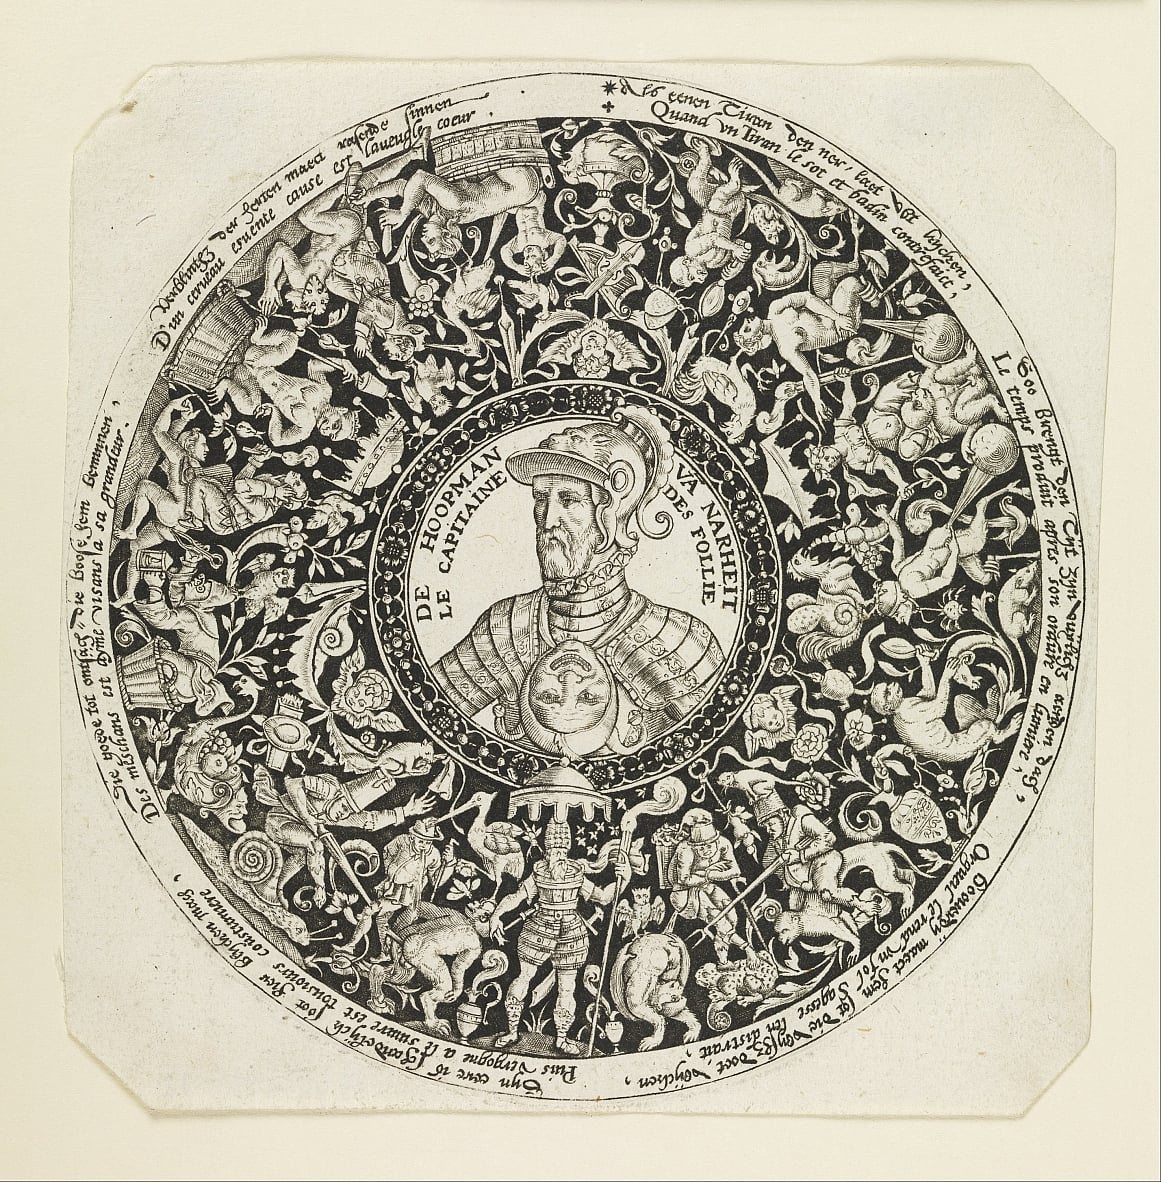 1558 Theodor de Bry DE HOOPMAN VA NARHEI, LE CAPITAINE DES FOLLIE